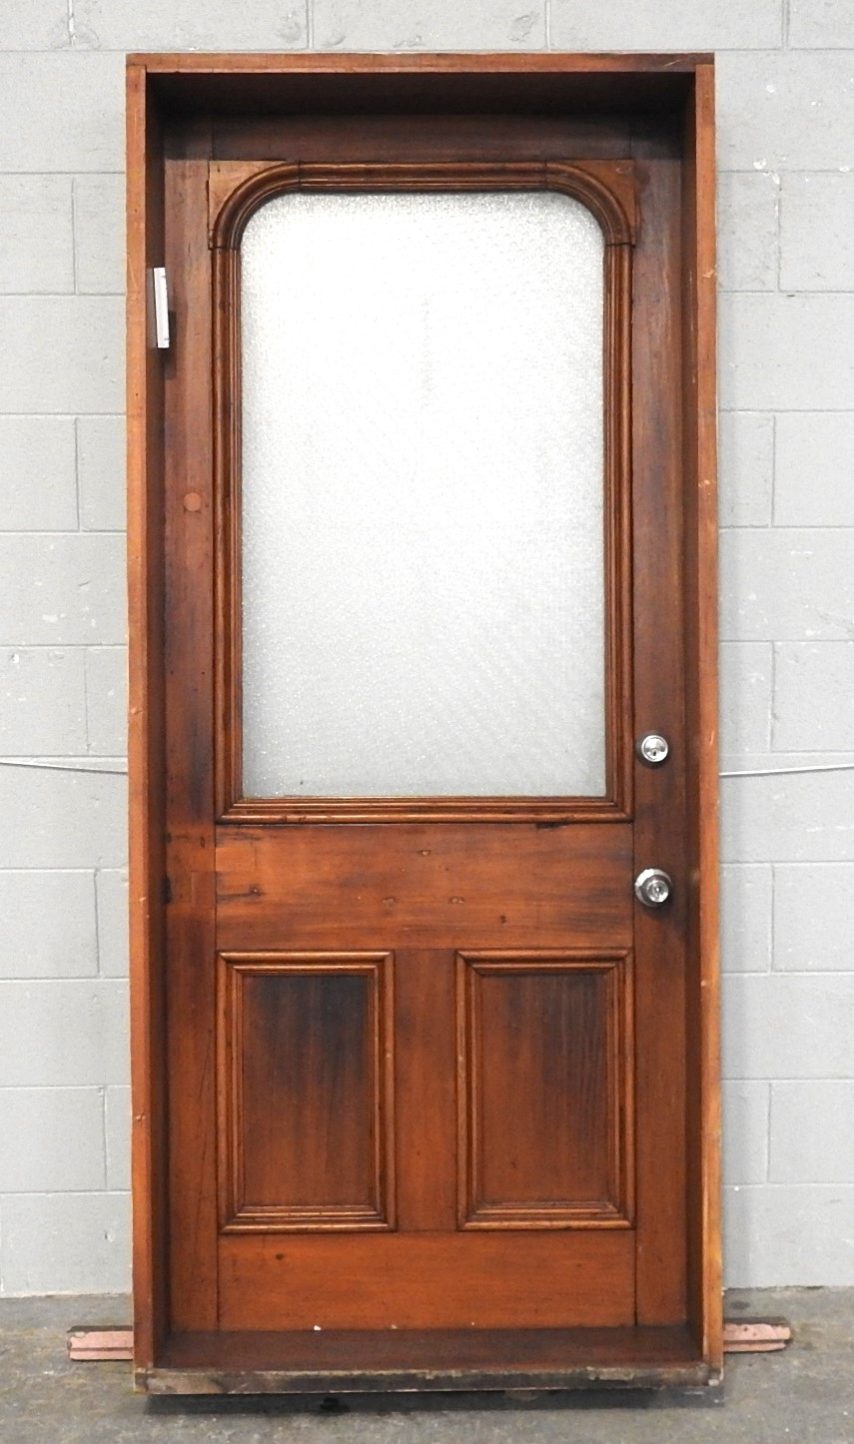 Wooden Villa Entry Door - Hung in Frame